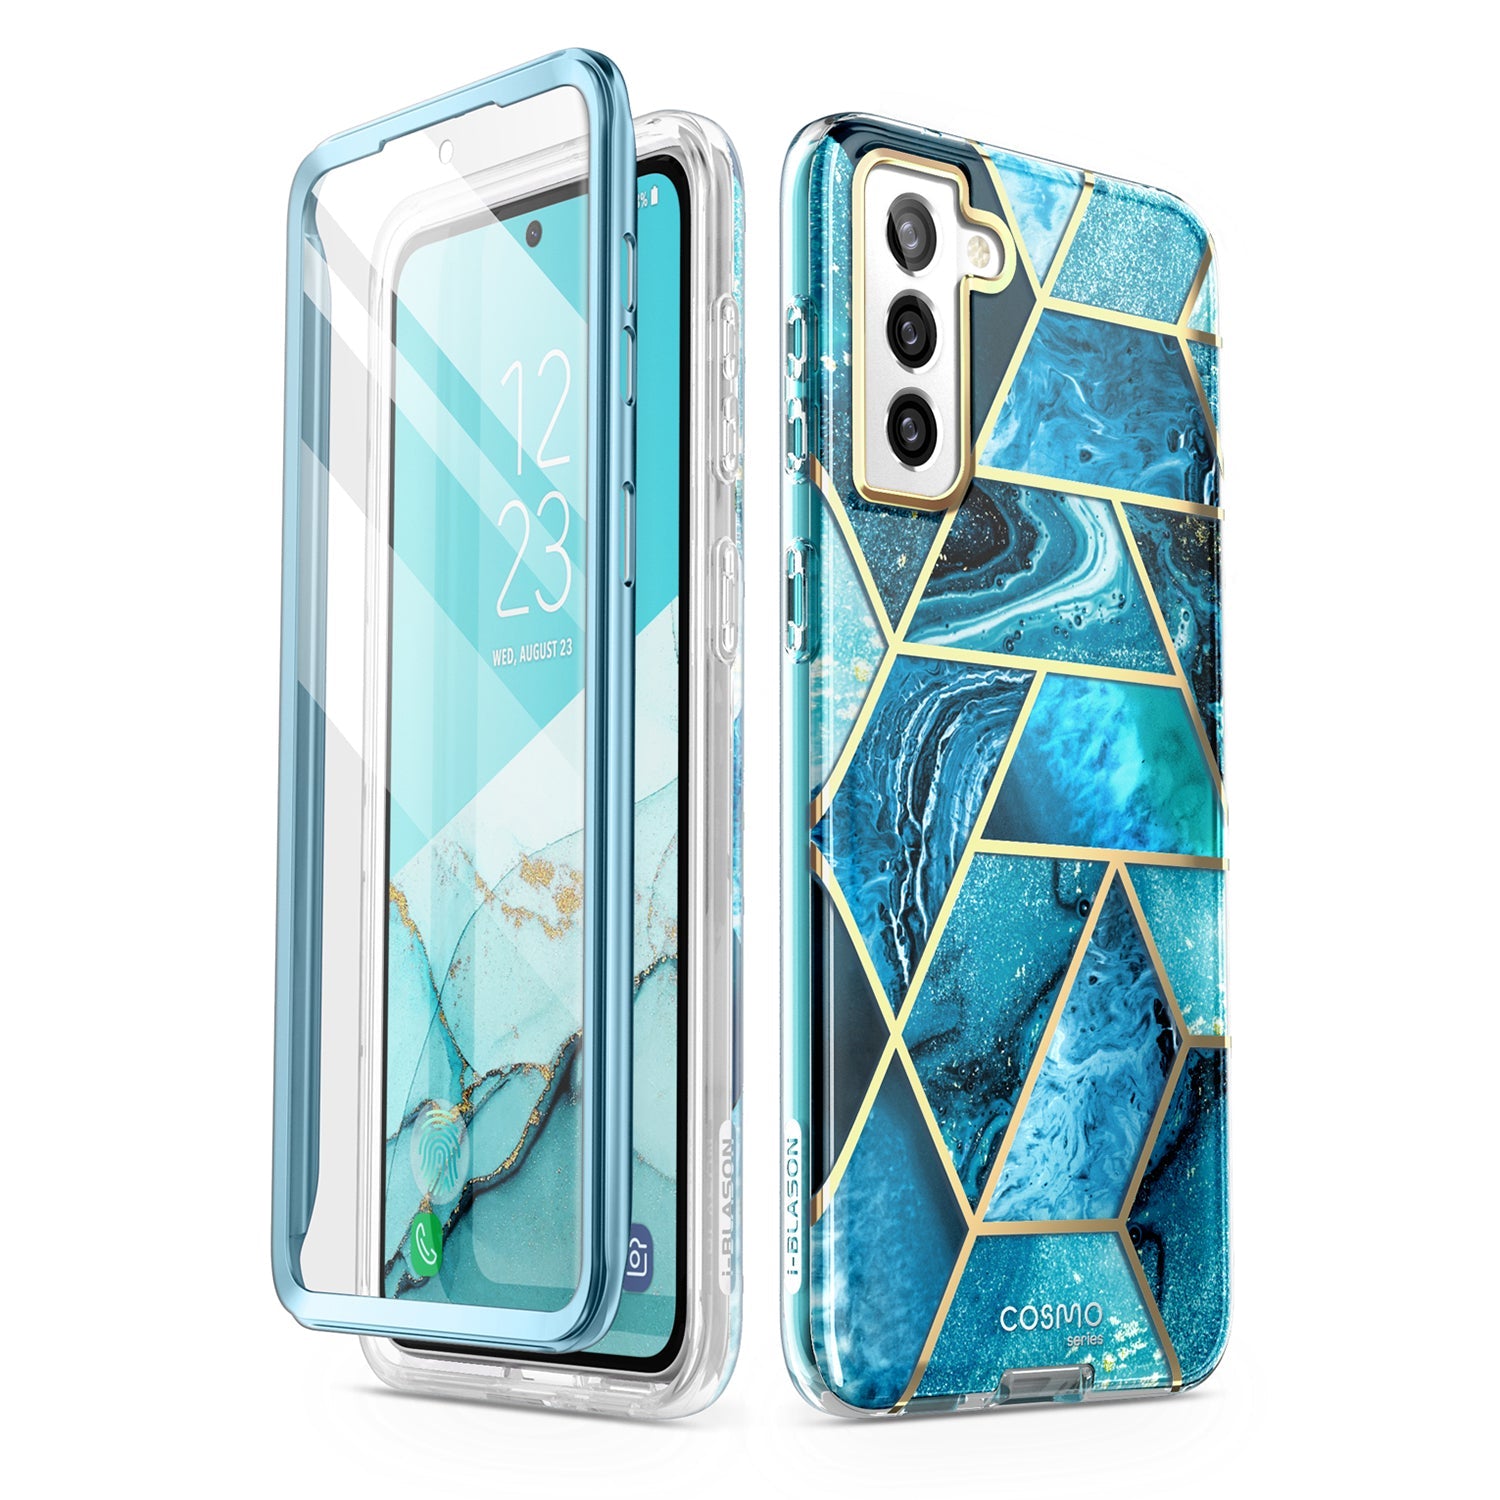 i-Blason Cosmo Series Slim Stylish Protective Case for Samsung Galaxy S21 FE (With Build-in Screen Protector) Default i-Blason Ocean 